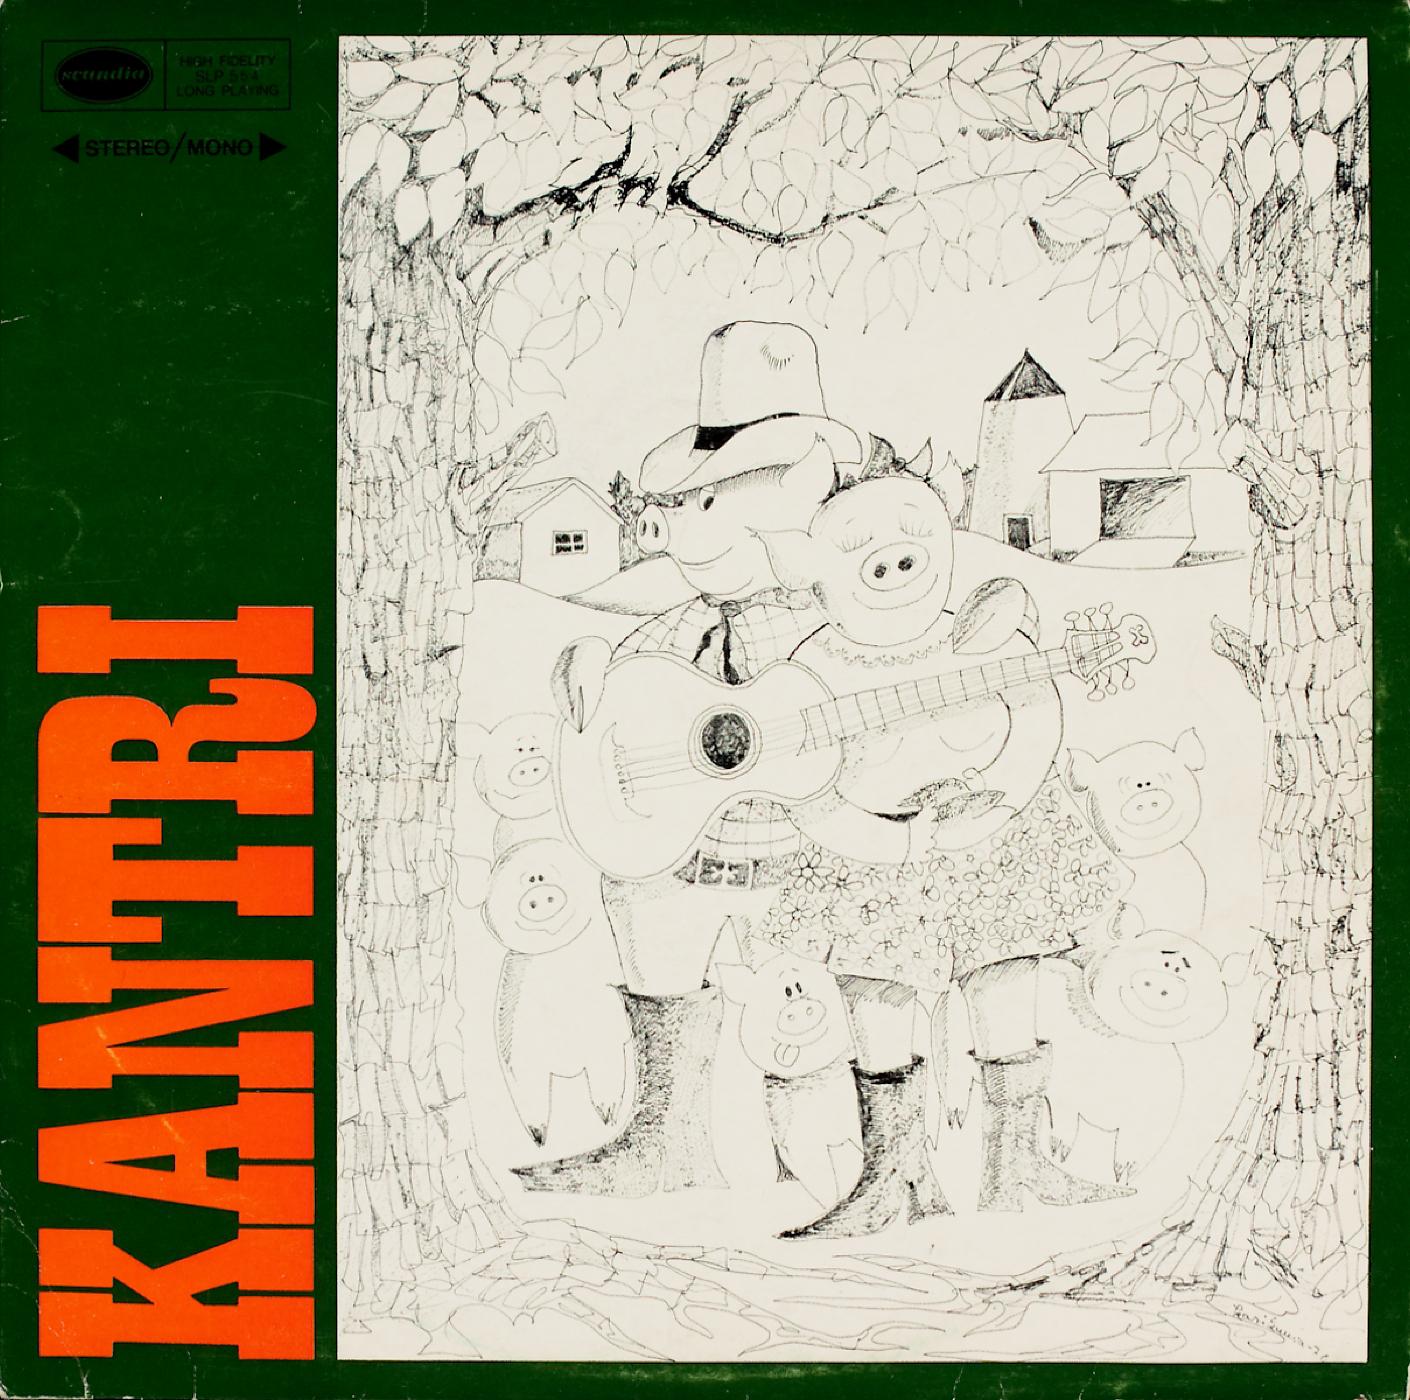 Постер альбома Kantri